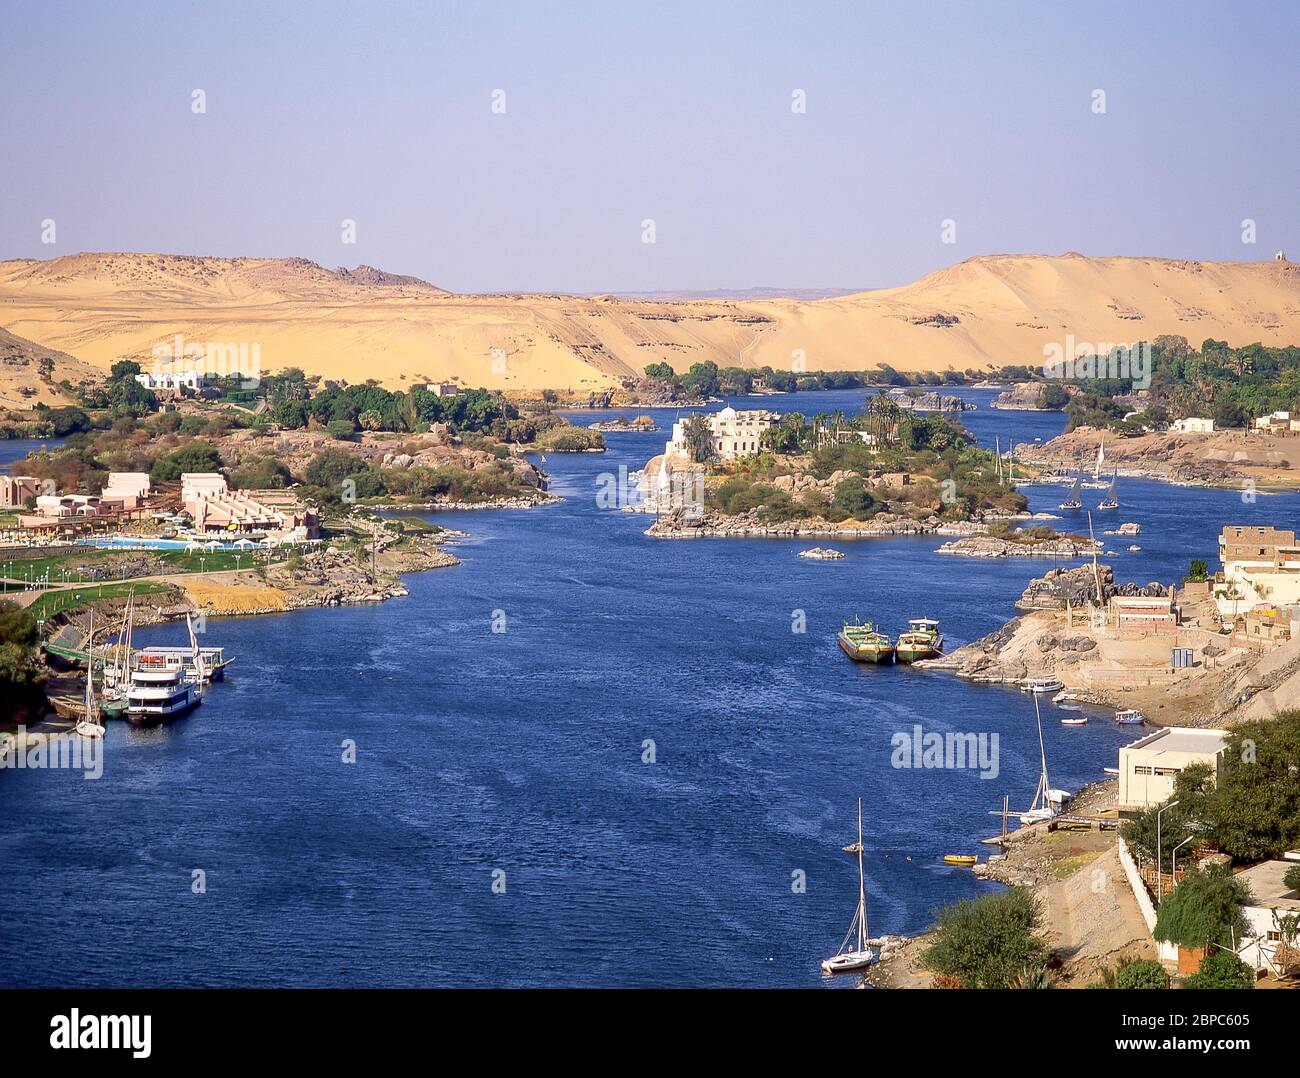 Blick auf die Hotels auf der Insel Assuan auf dem Nil, Assuan, Regierungsamt Assuan, Republik Ägypten Stockfoto